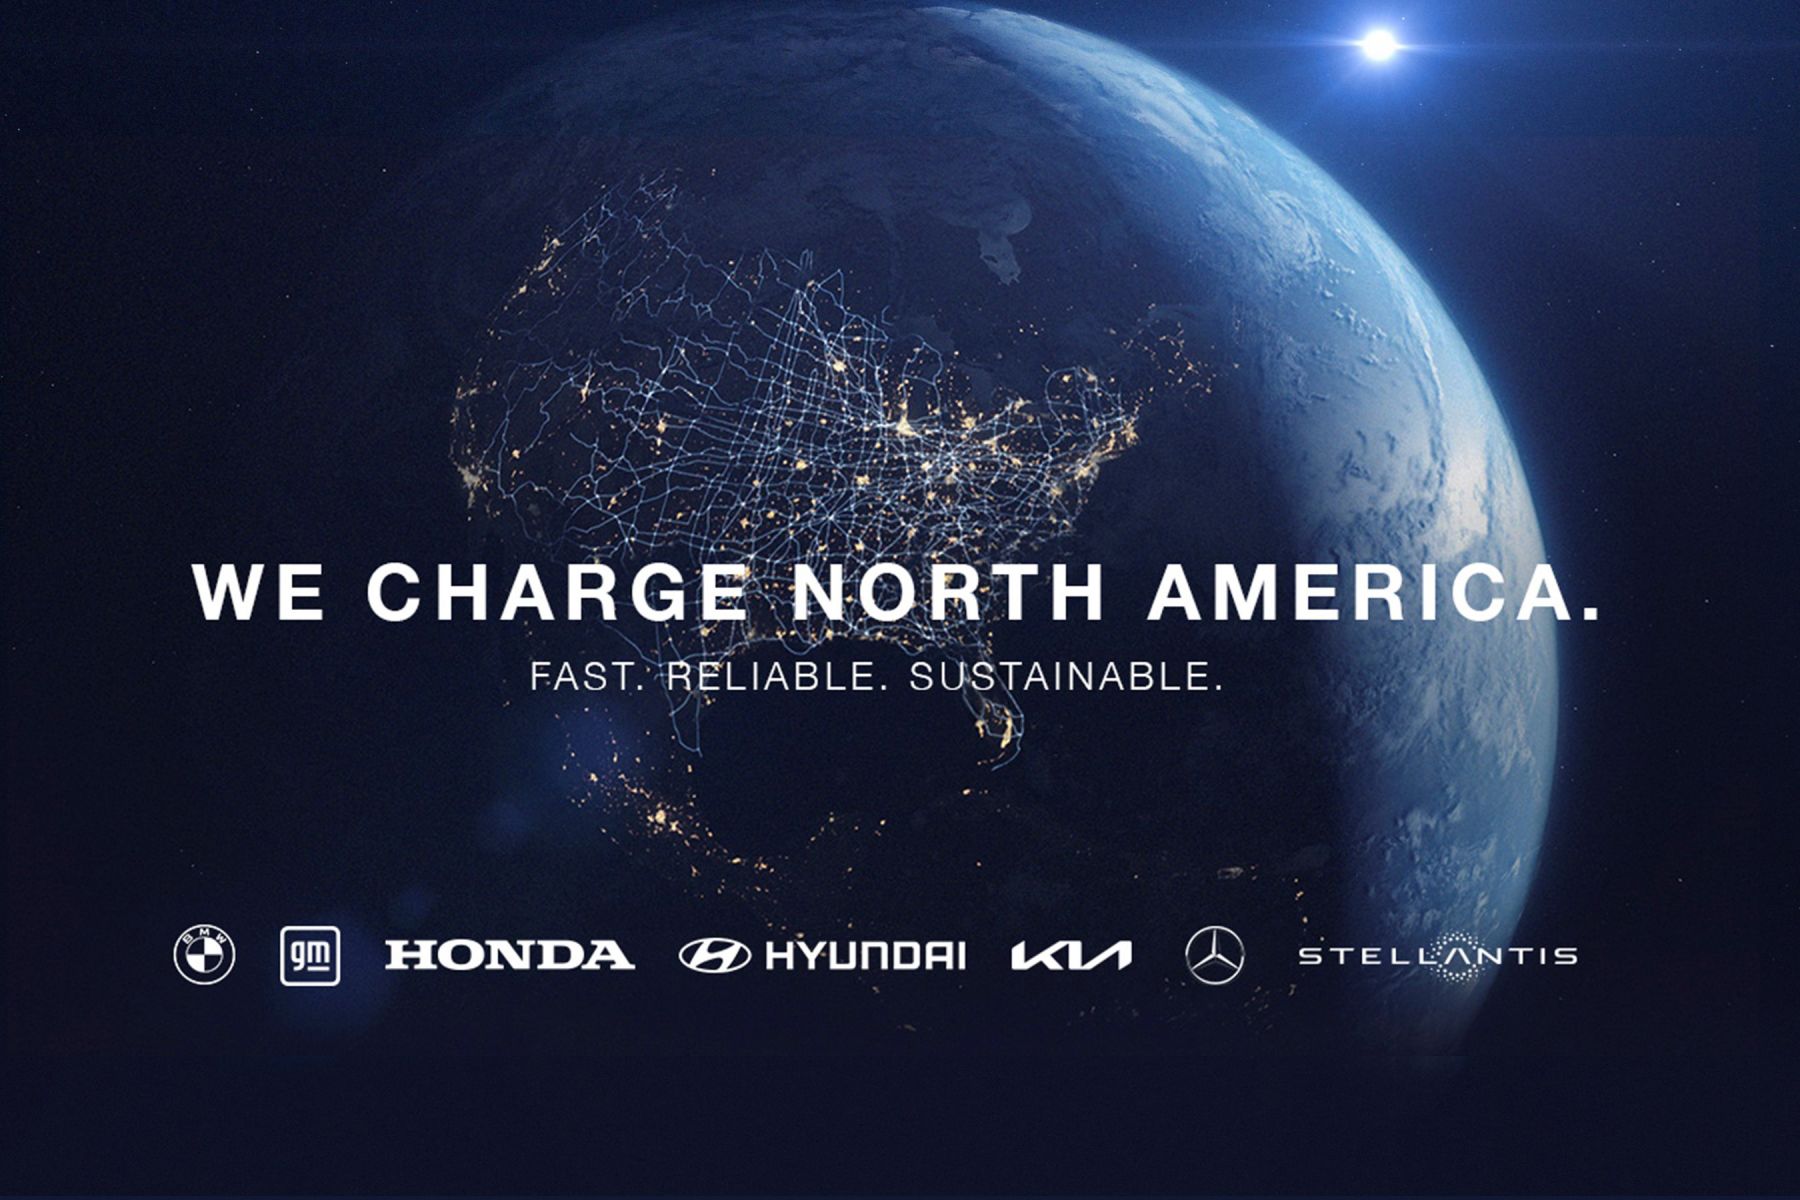 We charge North America